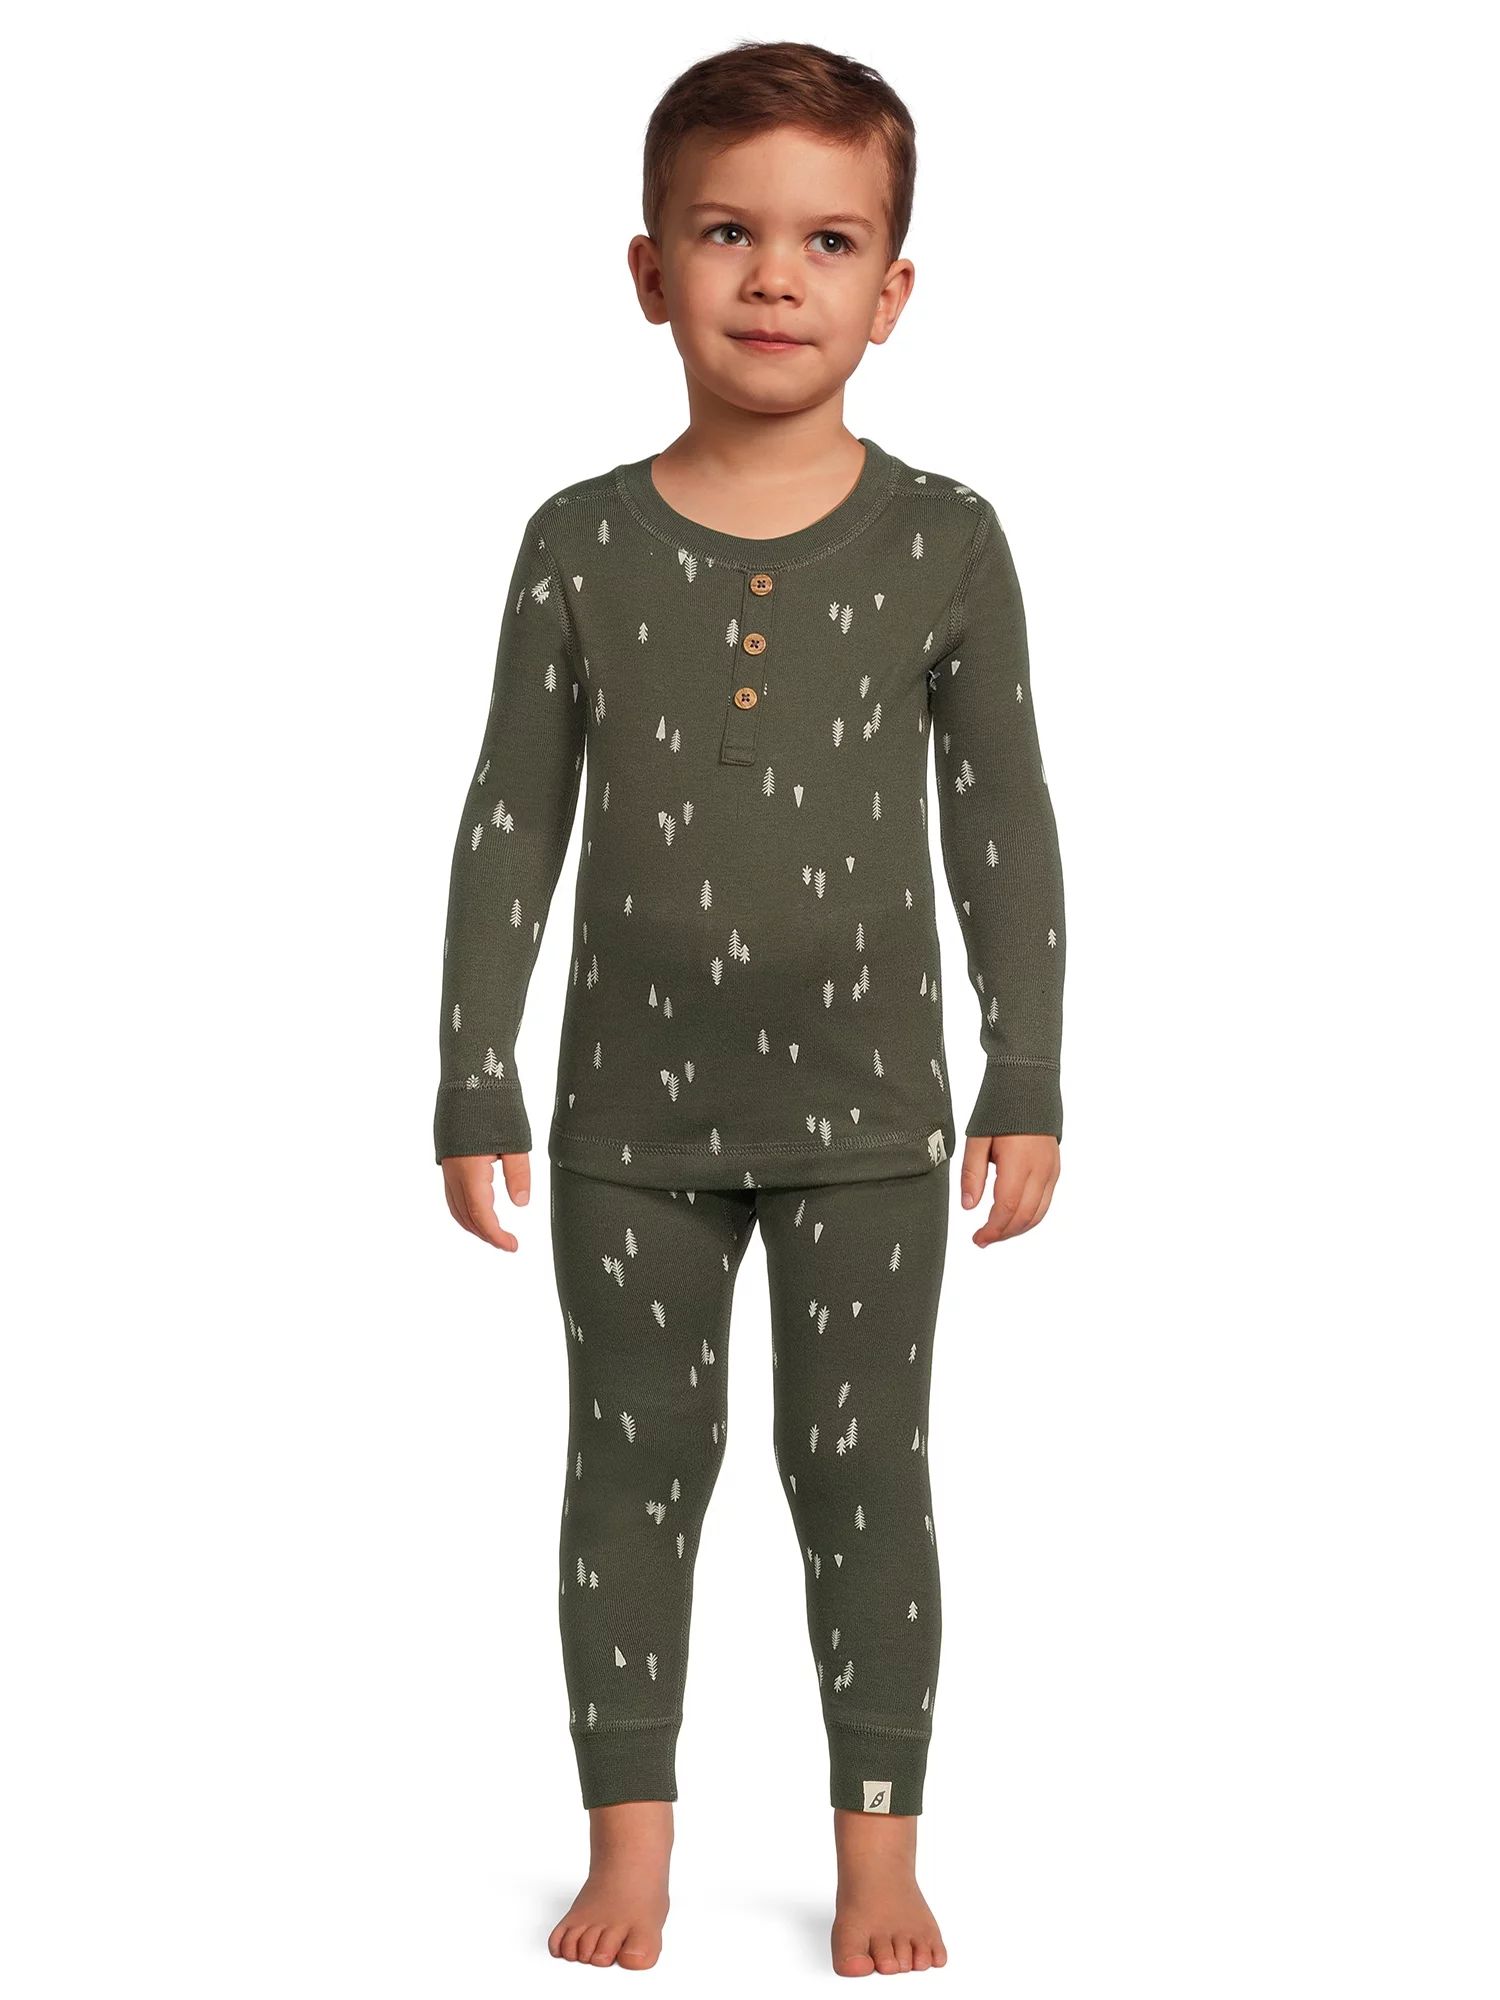 easy-peasy Toddler Unisex Long Sleeve Pant Pajama Set, 2-Piece, Sizes 12M-5T | Walmart (US)